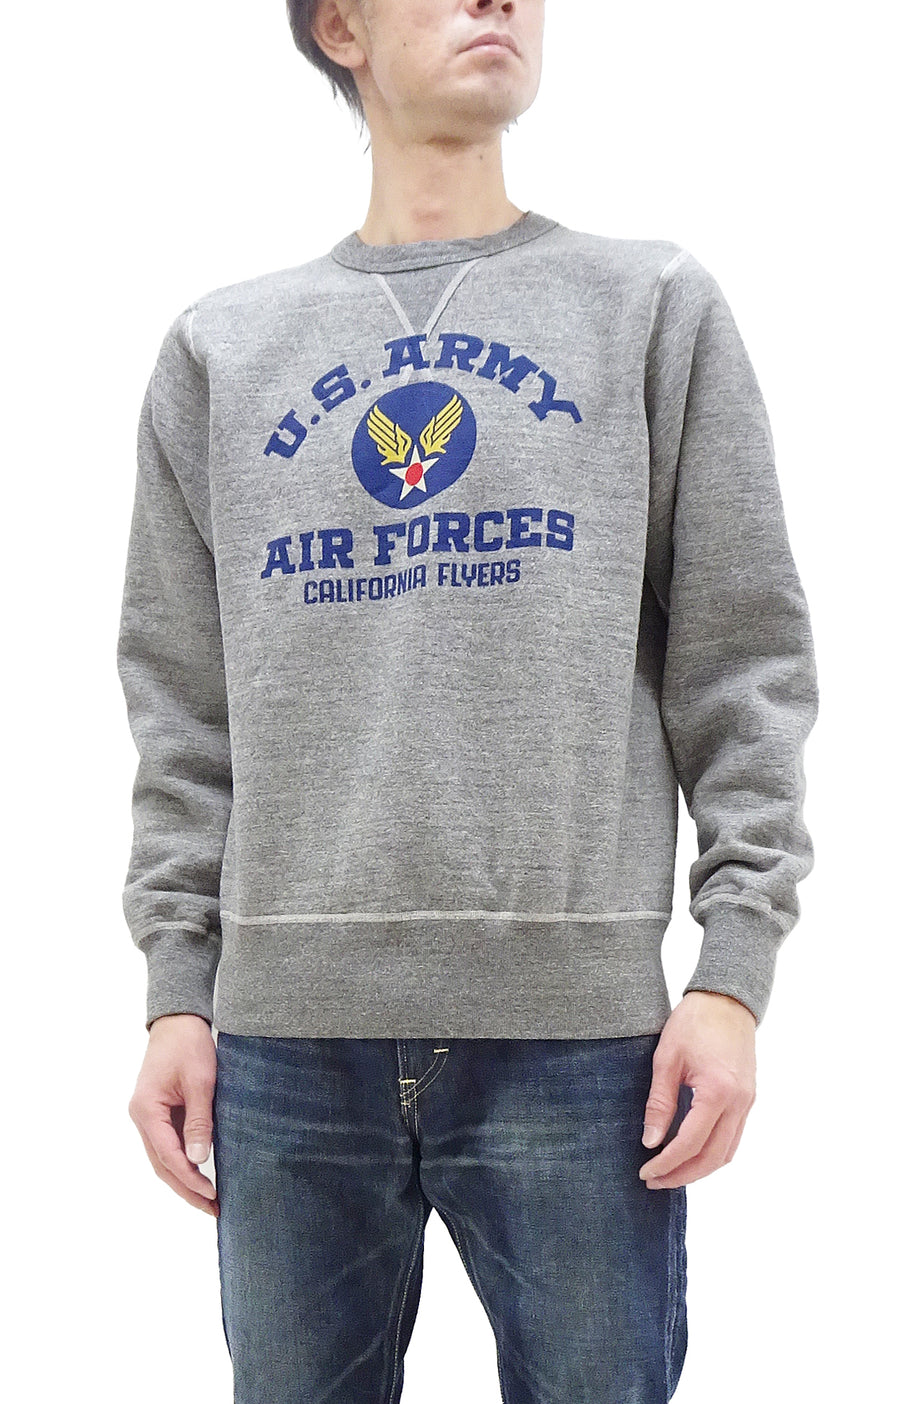 Buzz Rickson Sweatshirt Men's Us Army Air Force California Flyers